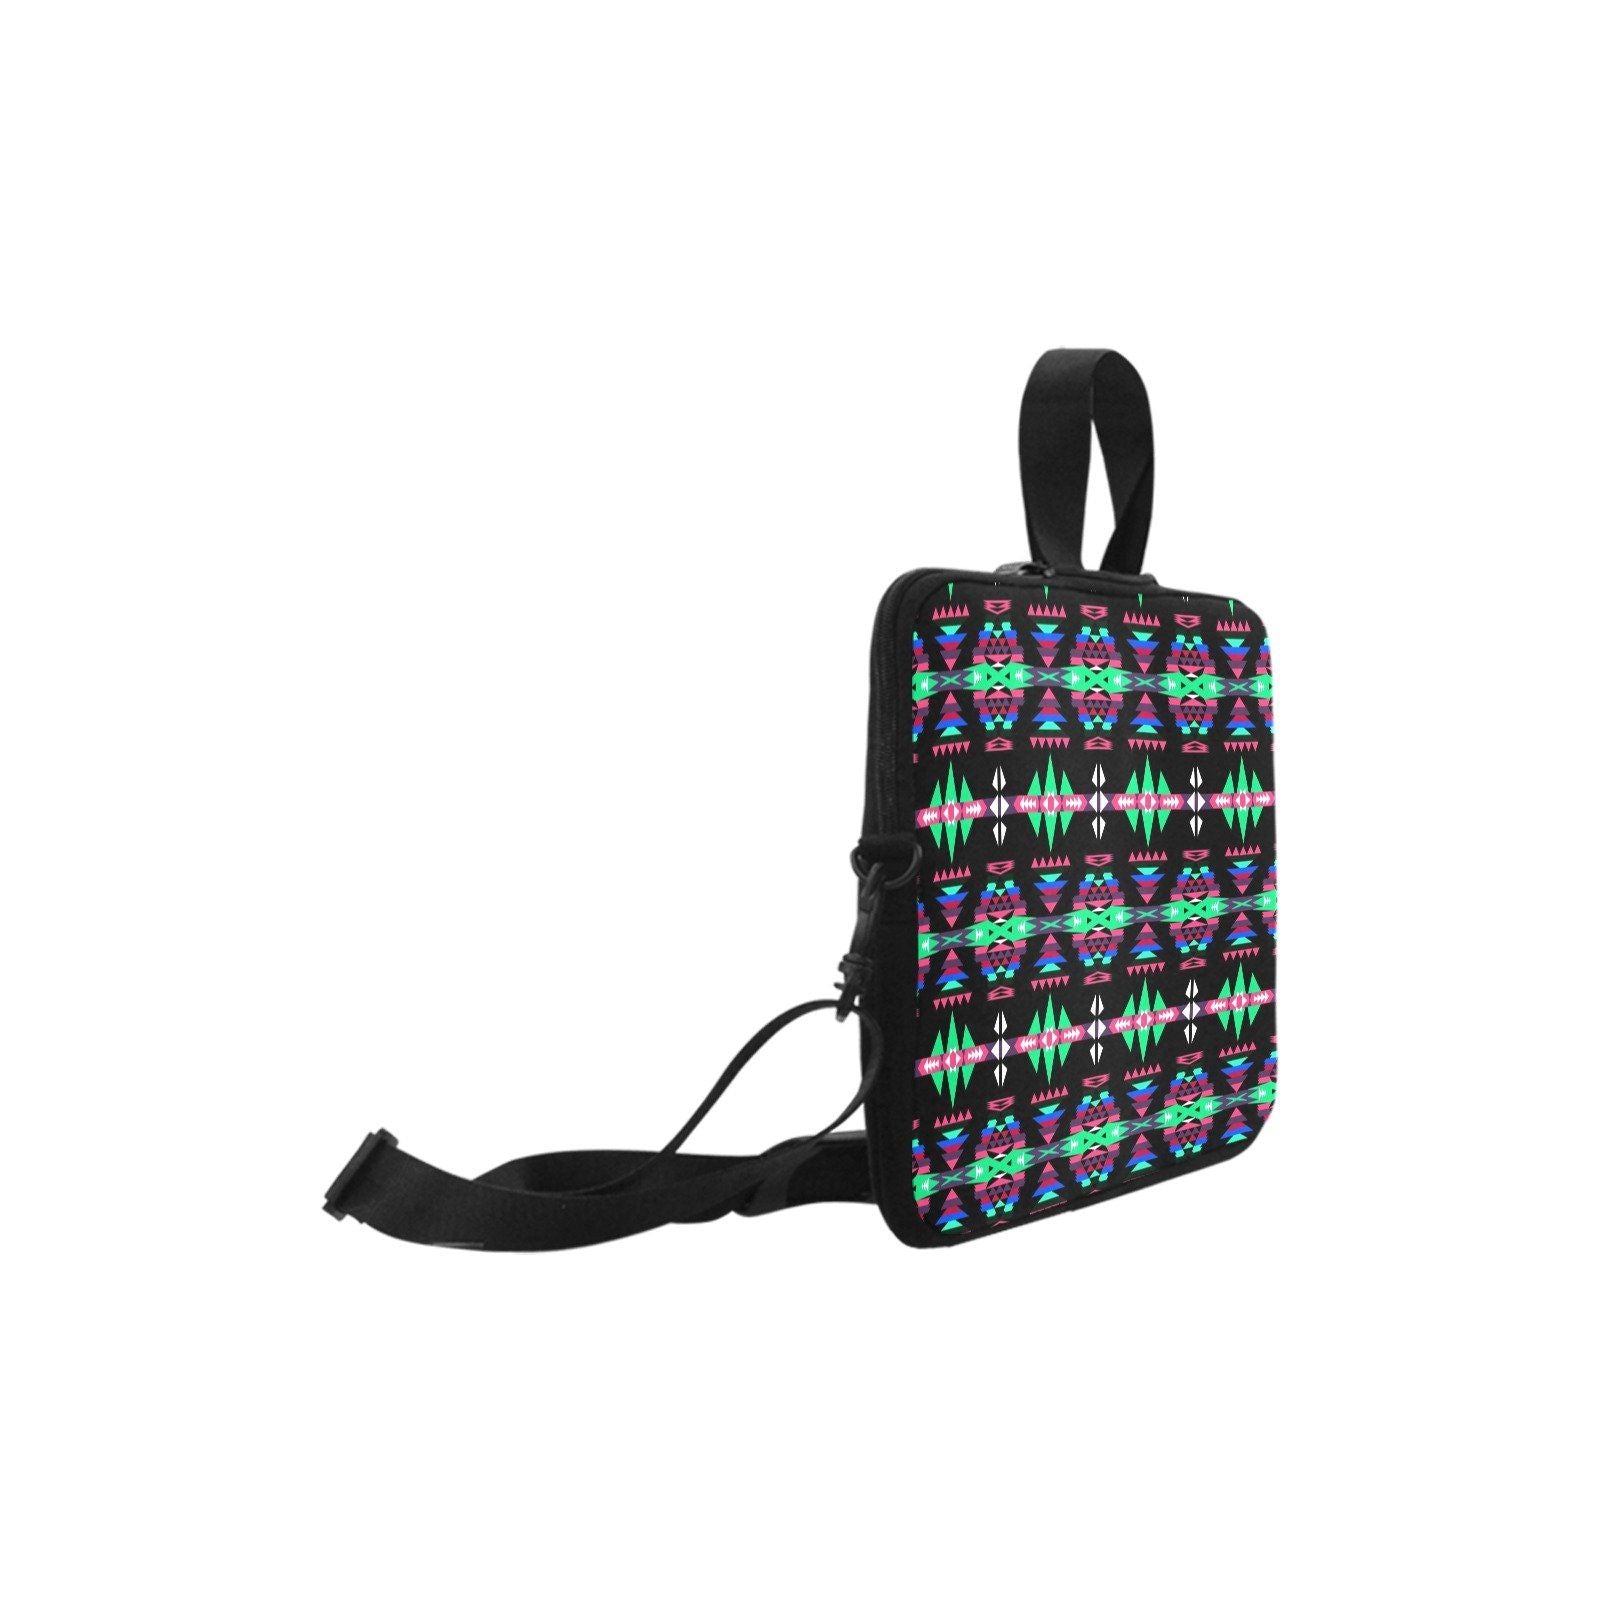 River Trail Journey Laptop Handbags 17" bag e-joyer 